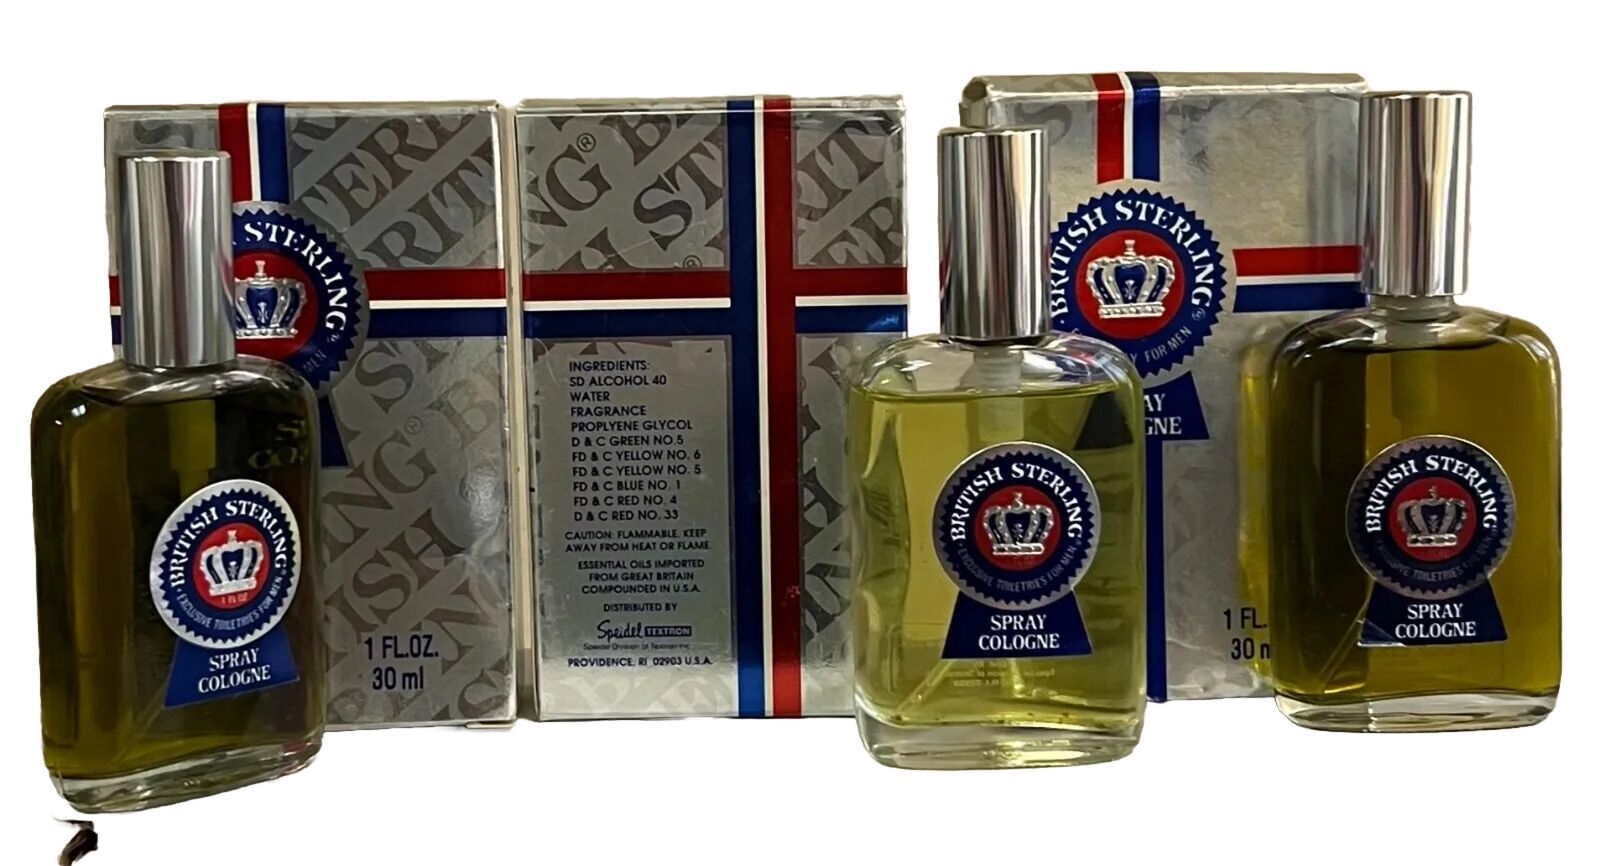 3 British Sterling Spray Cologne 1  fl oz each BOXED IN GLASS BOTTLE Original90s